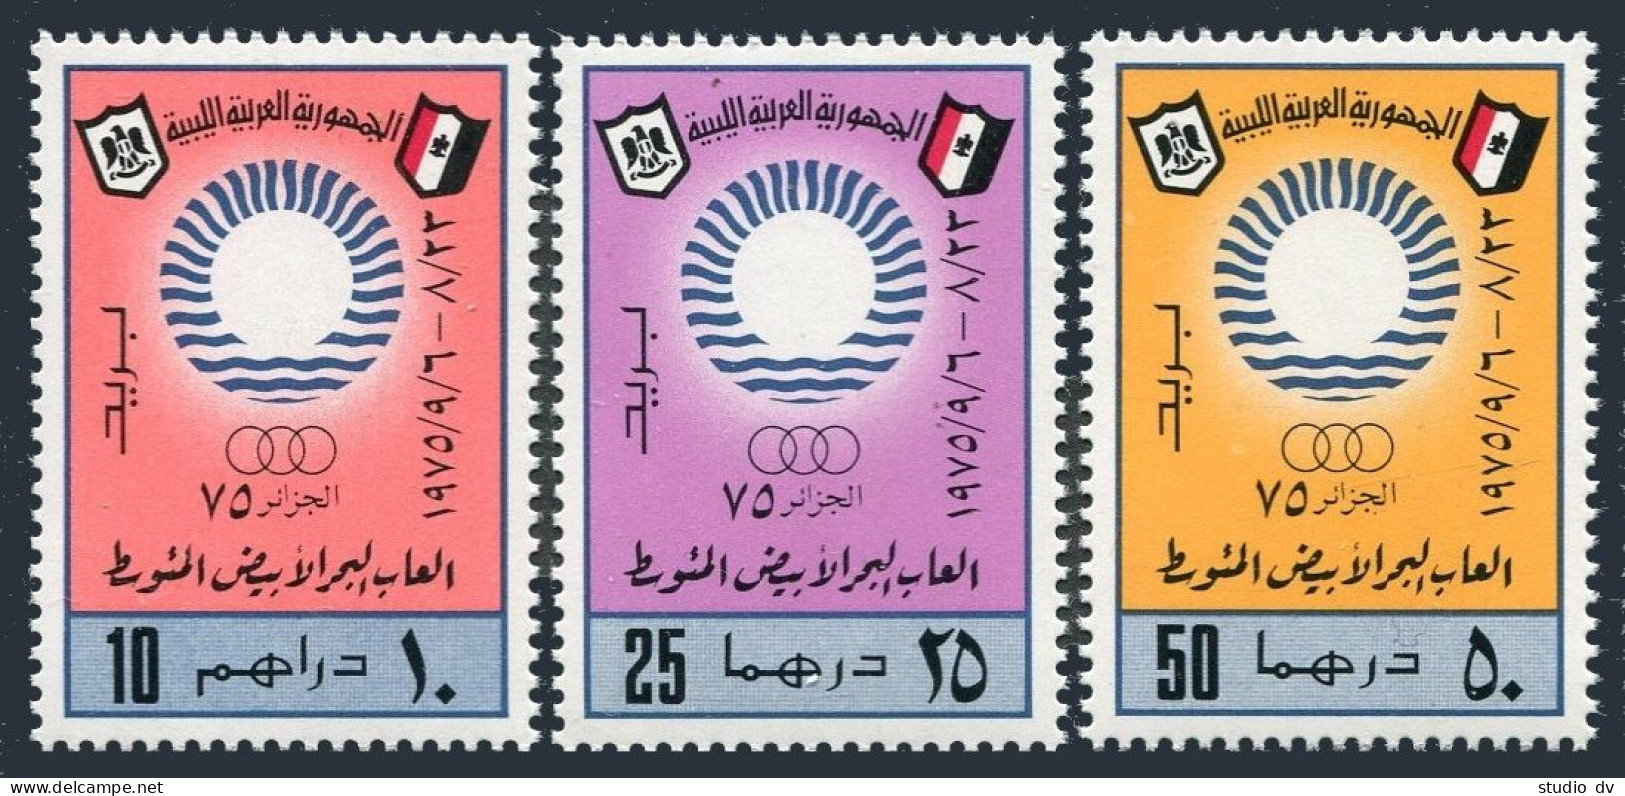 Libya 578-580,MNH.Michel 491-493. Mediterranean Games,Algeria-1975. - Libye